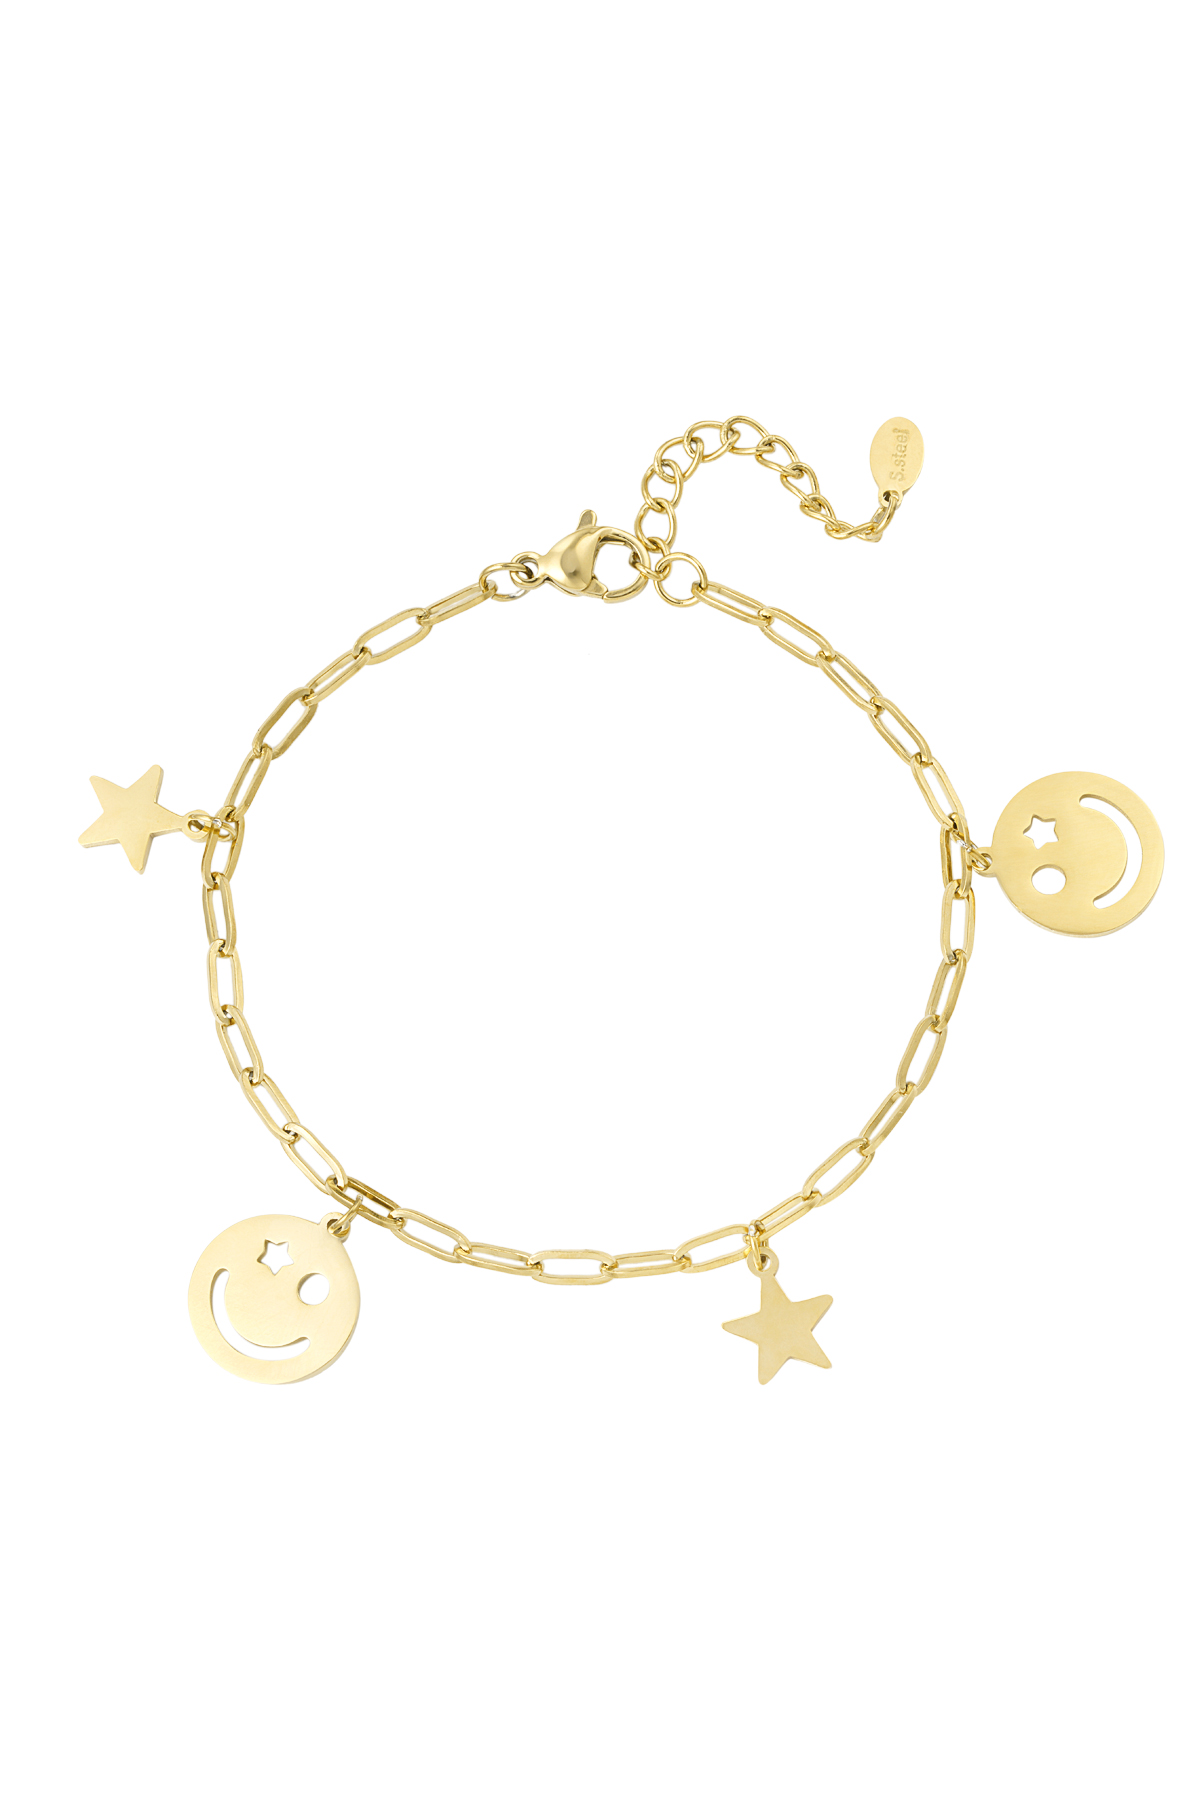 Happy night charm bracelet - gold 